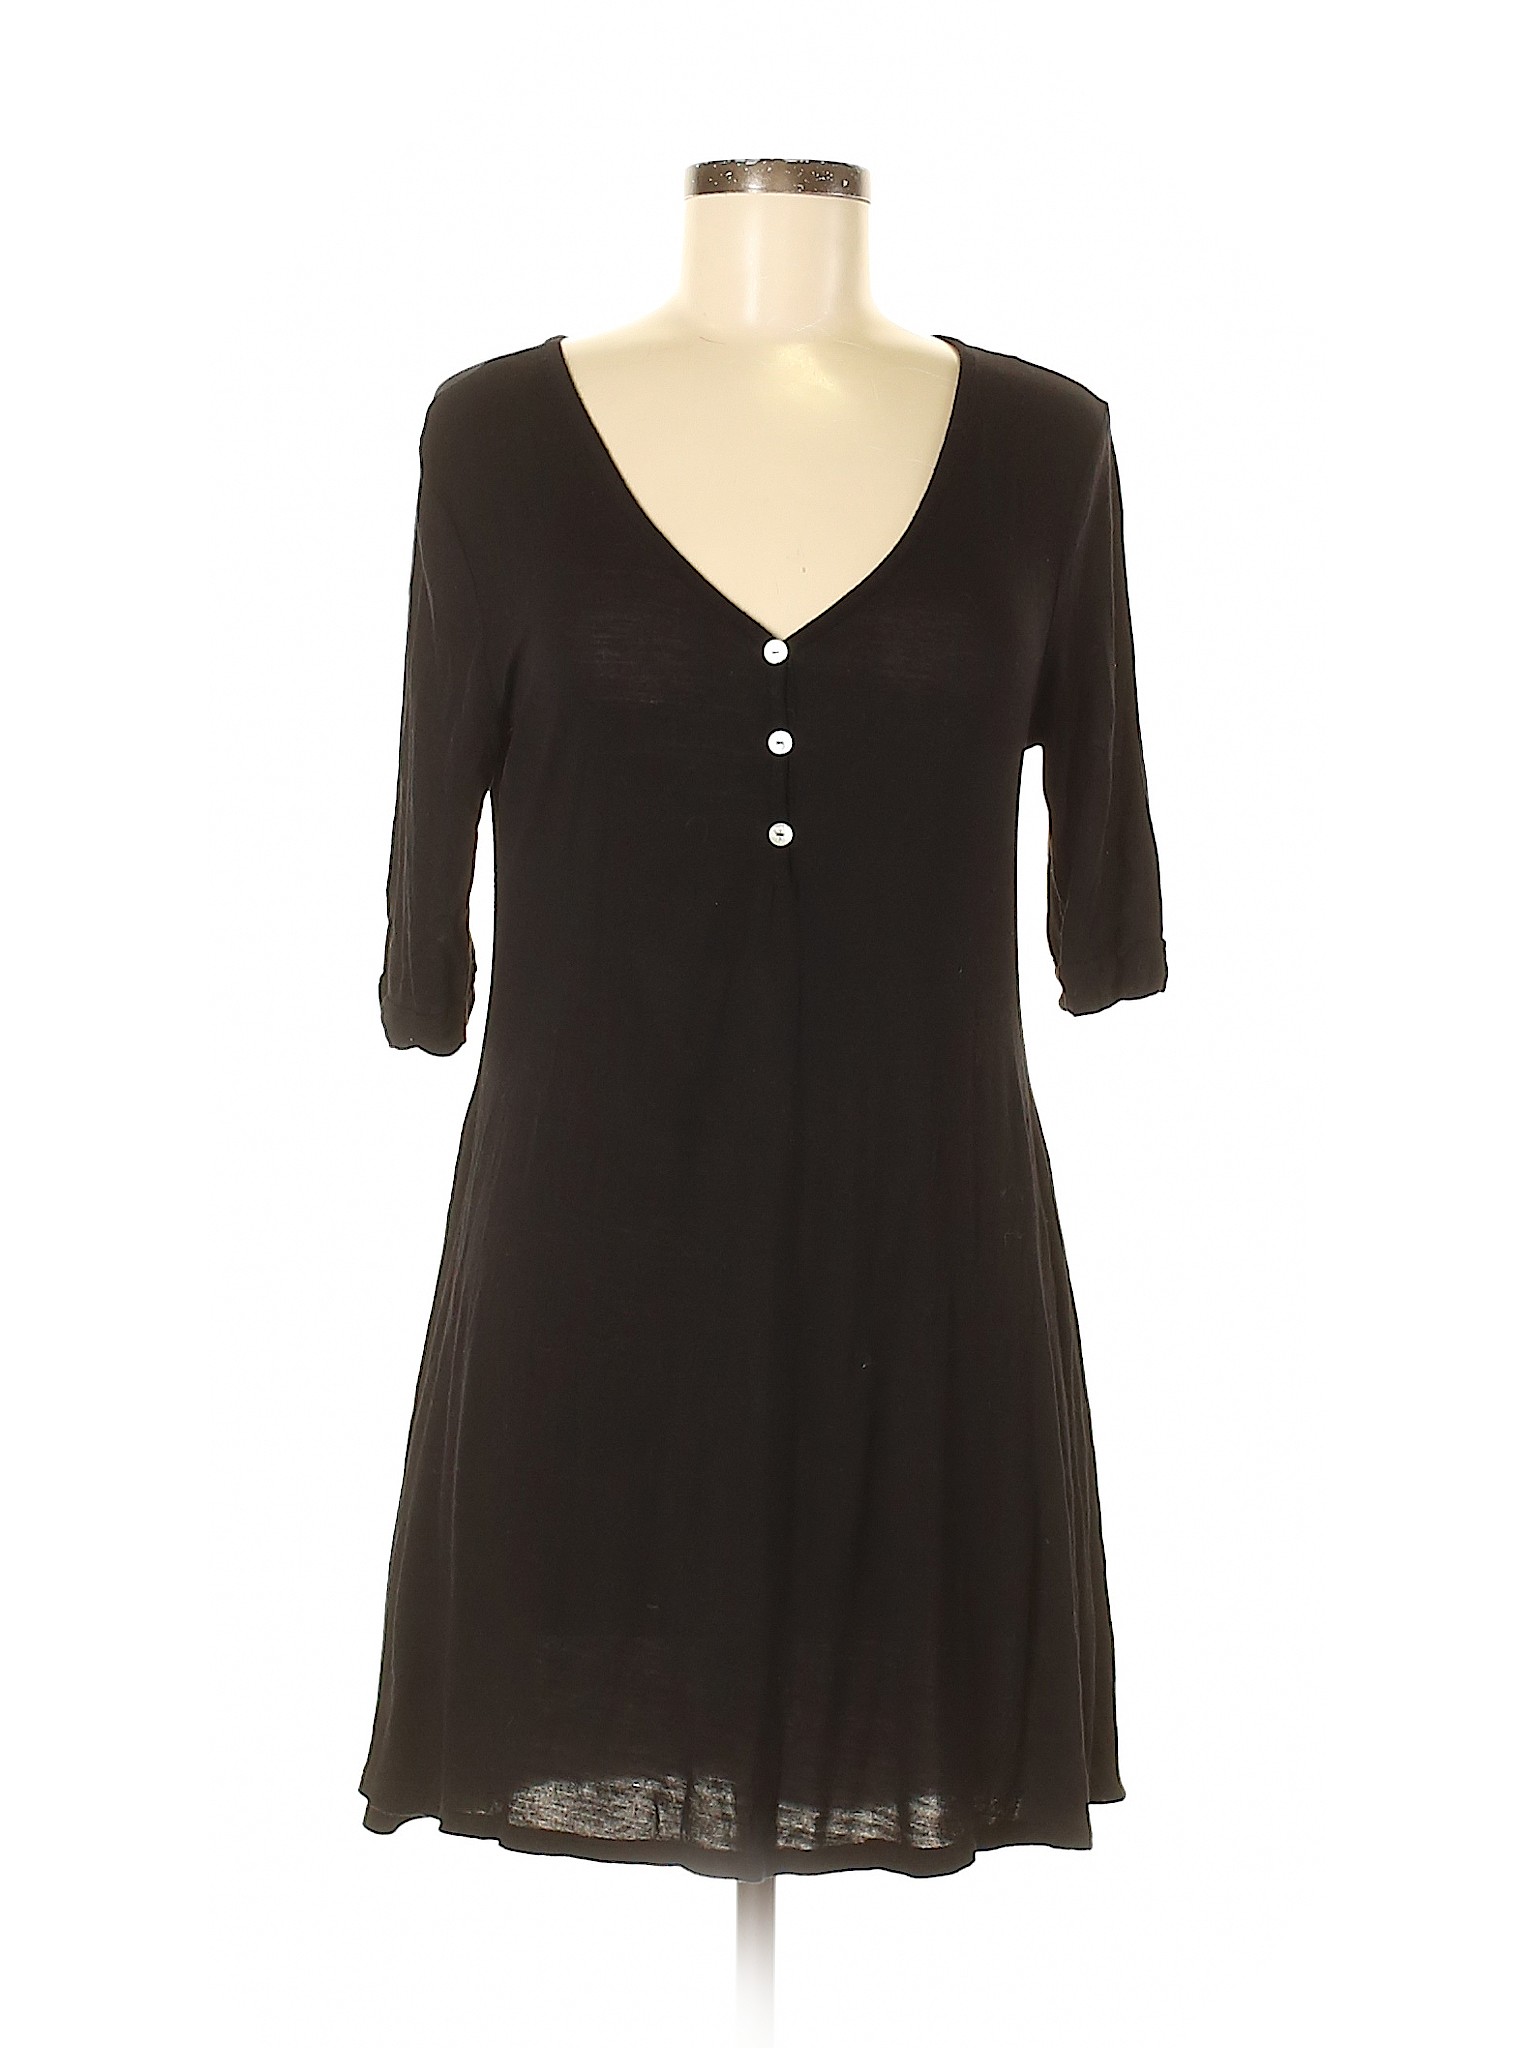 Zenana Outfitters Women Black Casual Dress Med | eBay